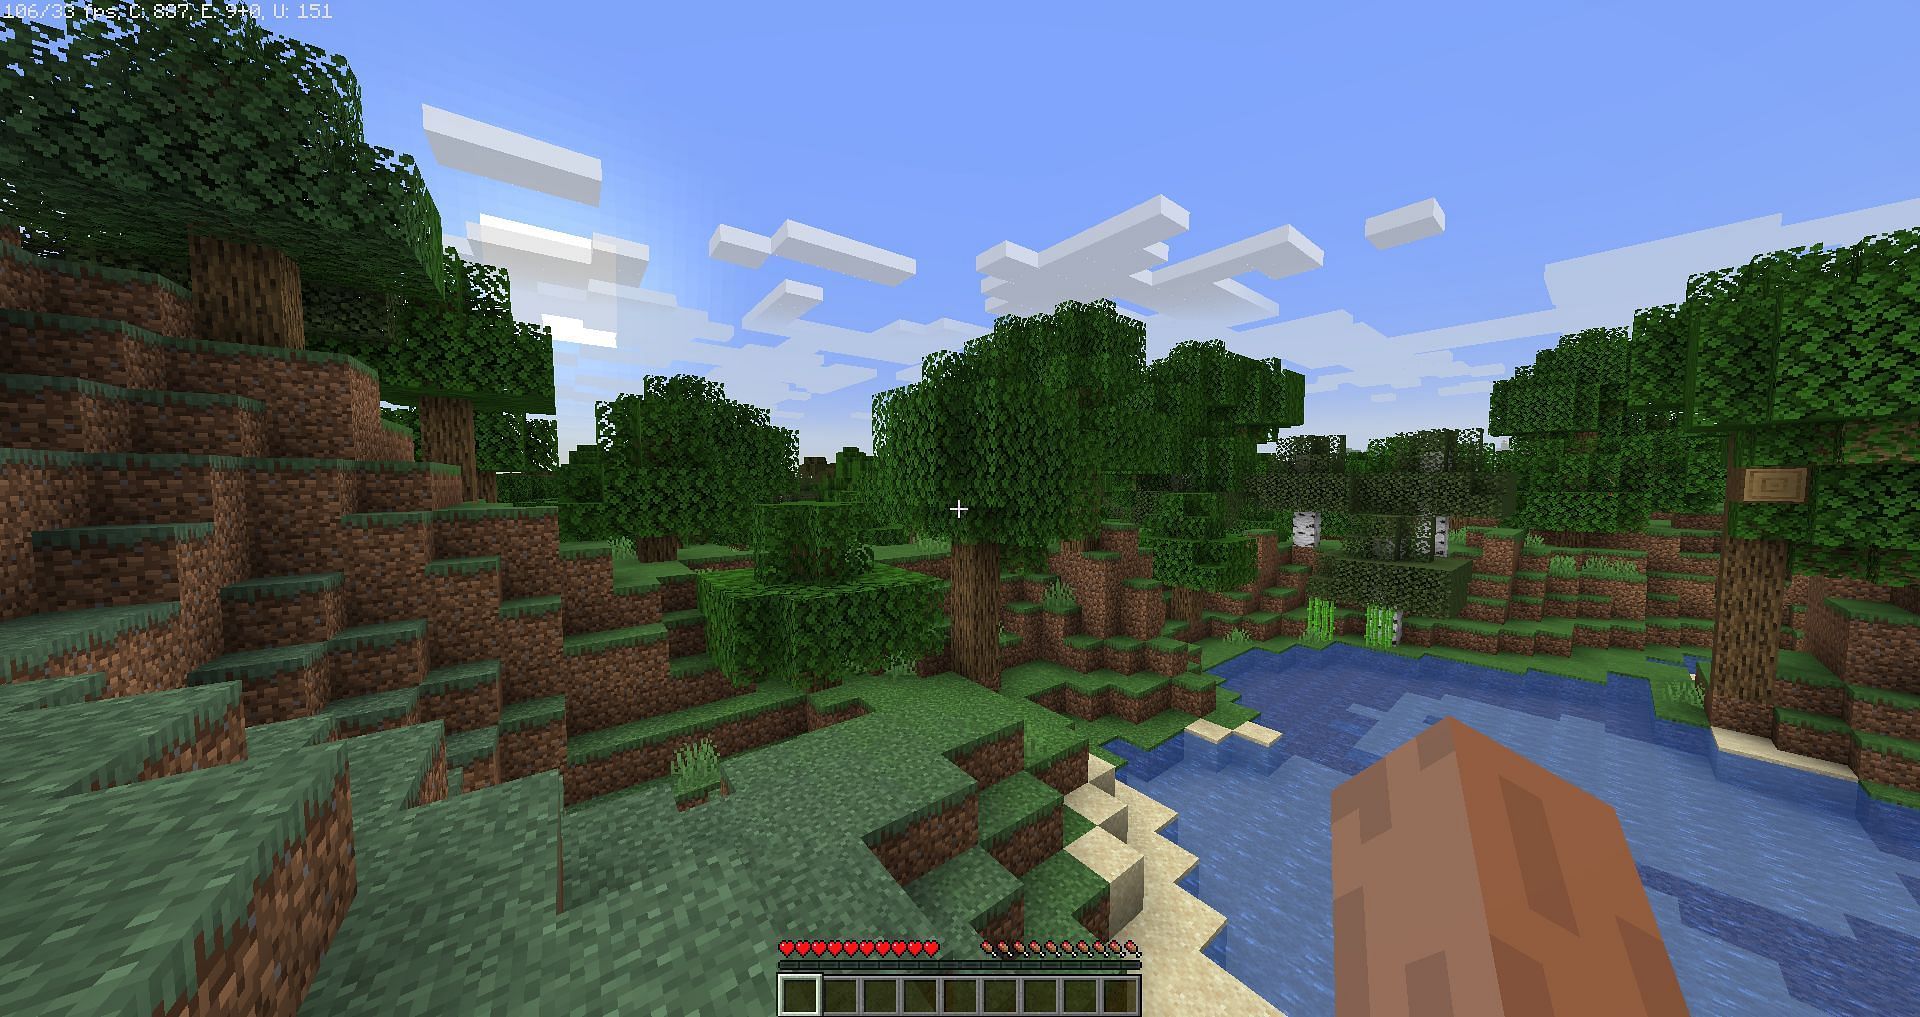 Plains provide abundant resources in Minecraft (Image via Mojang)